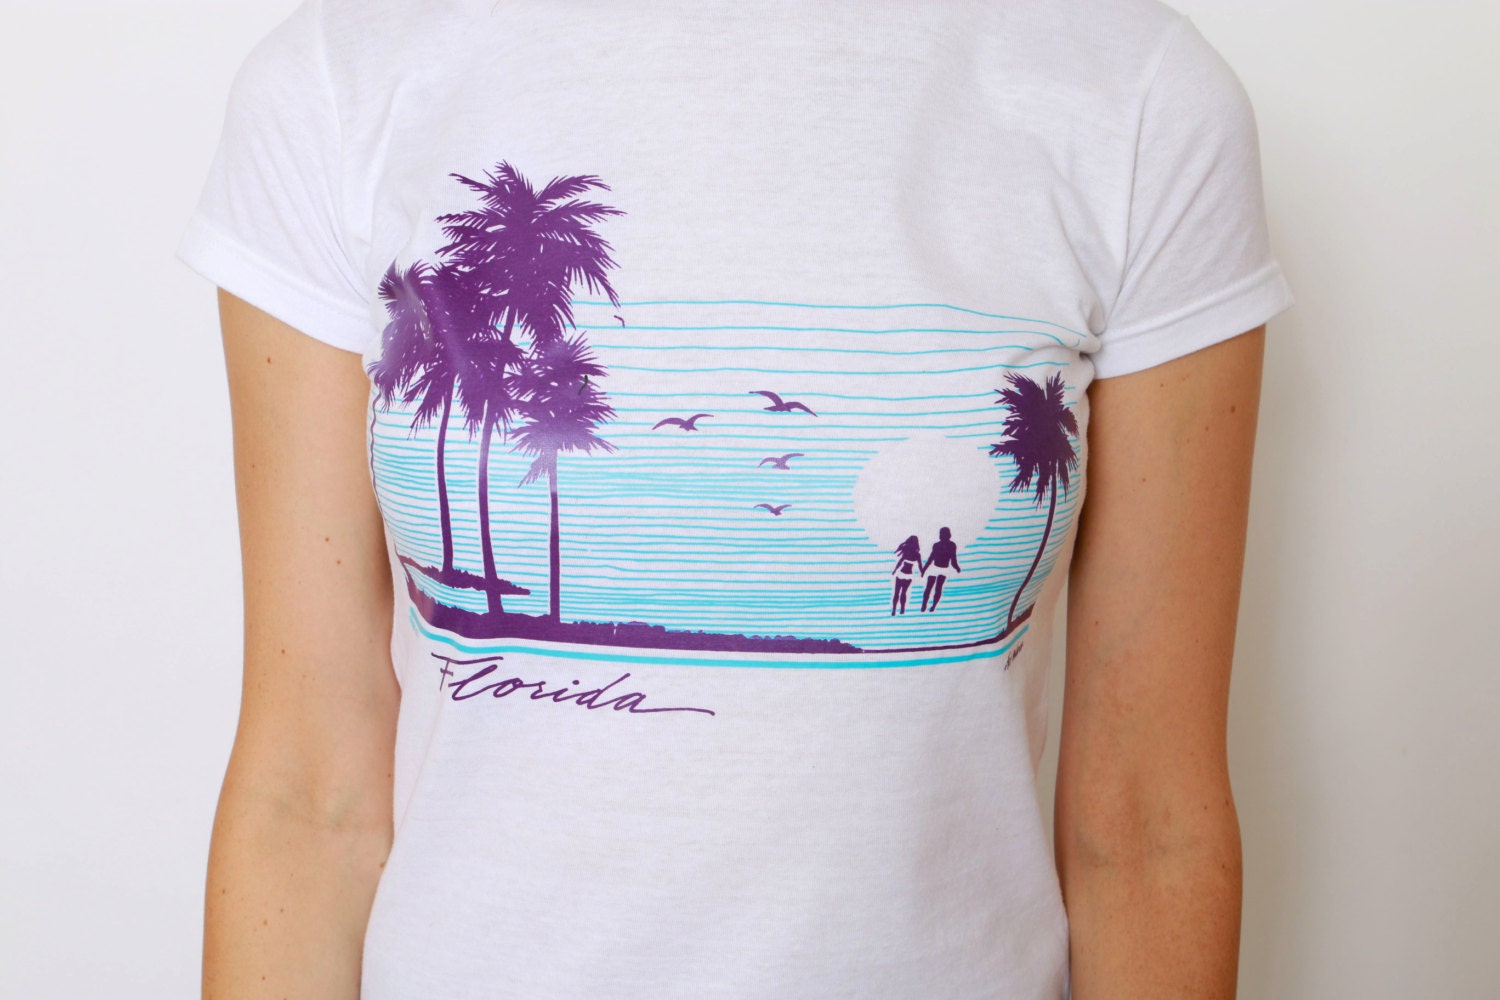 Vintage Florida Tee / 80s Beach T-Shirt by DazedAndVintage on Etsy